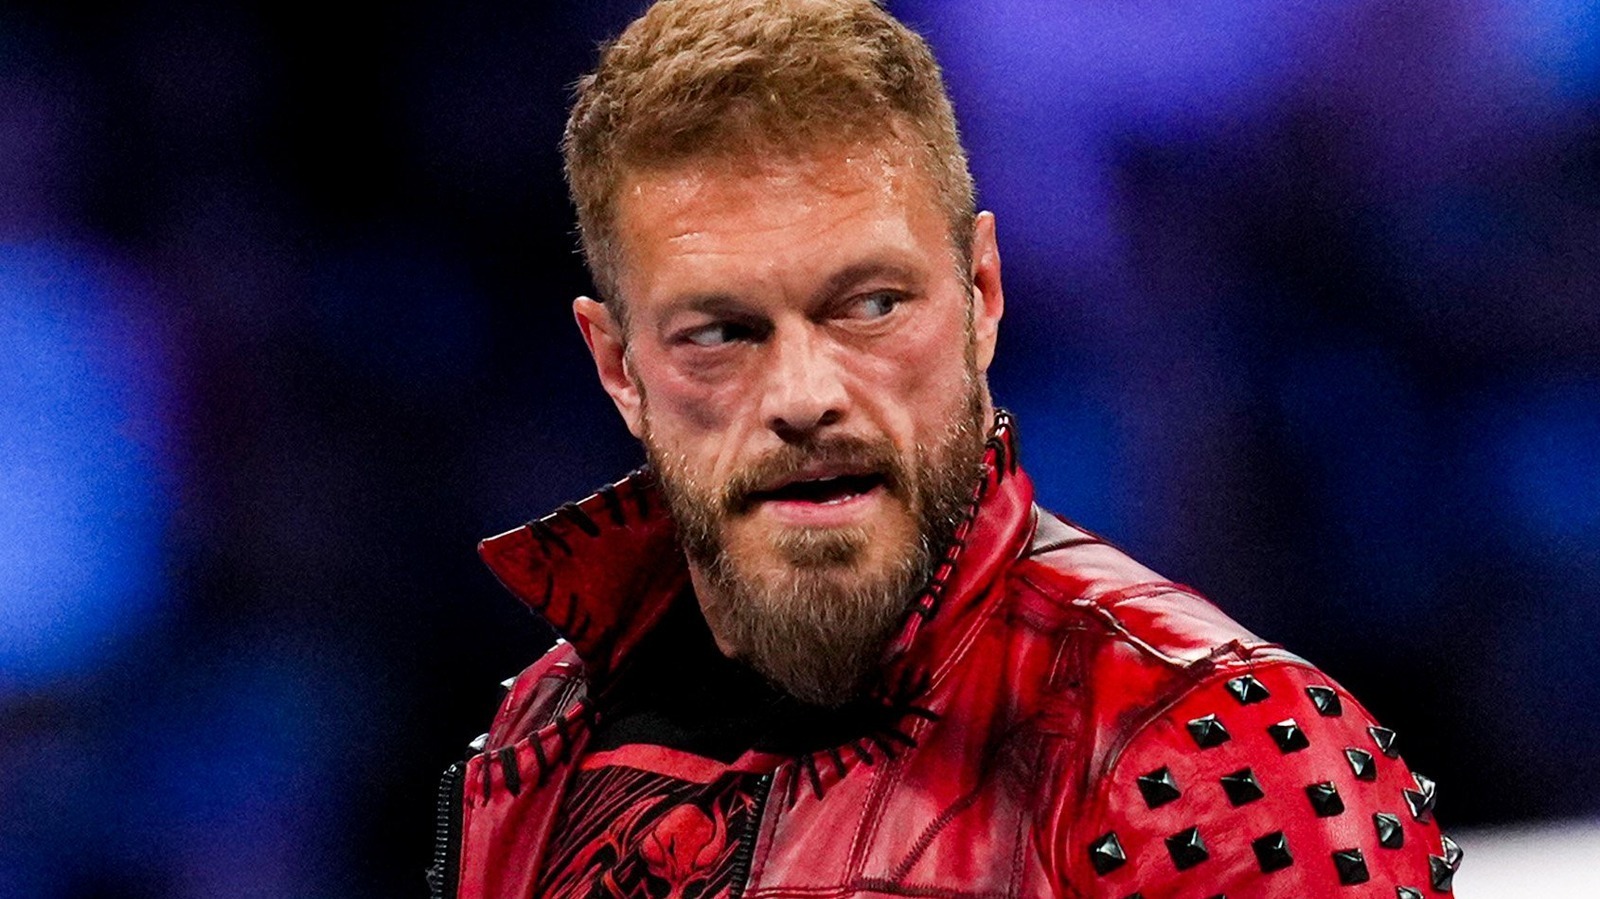 Edge Addresses Retirement Rumors, Reveals Last Match Of Current WWE Contract